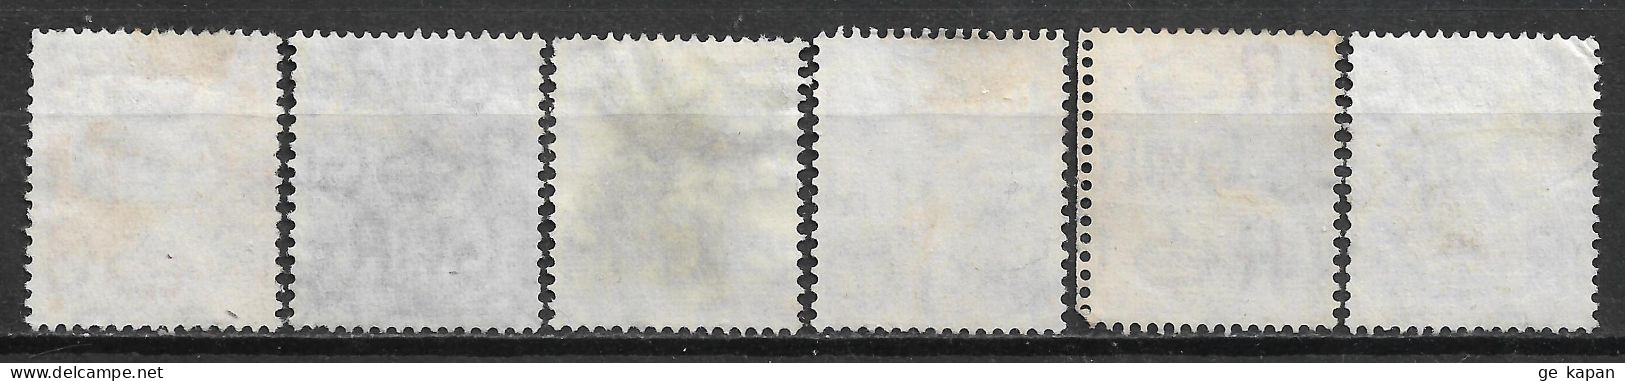 1950-1951 GREAT BRITAIN Complete Set Of 6 Used Stamps (Scott # 280-285) CV $4.00 - Usados